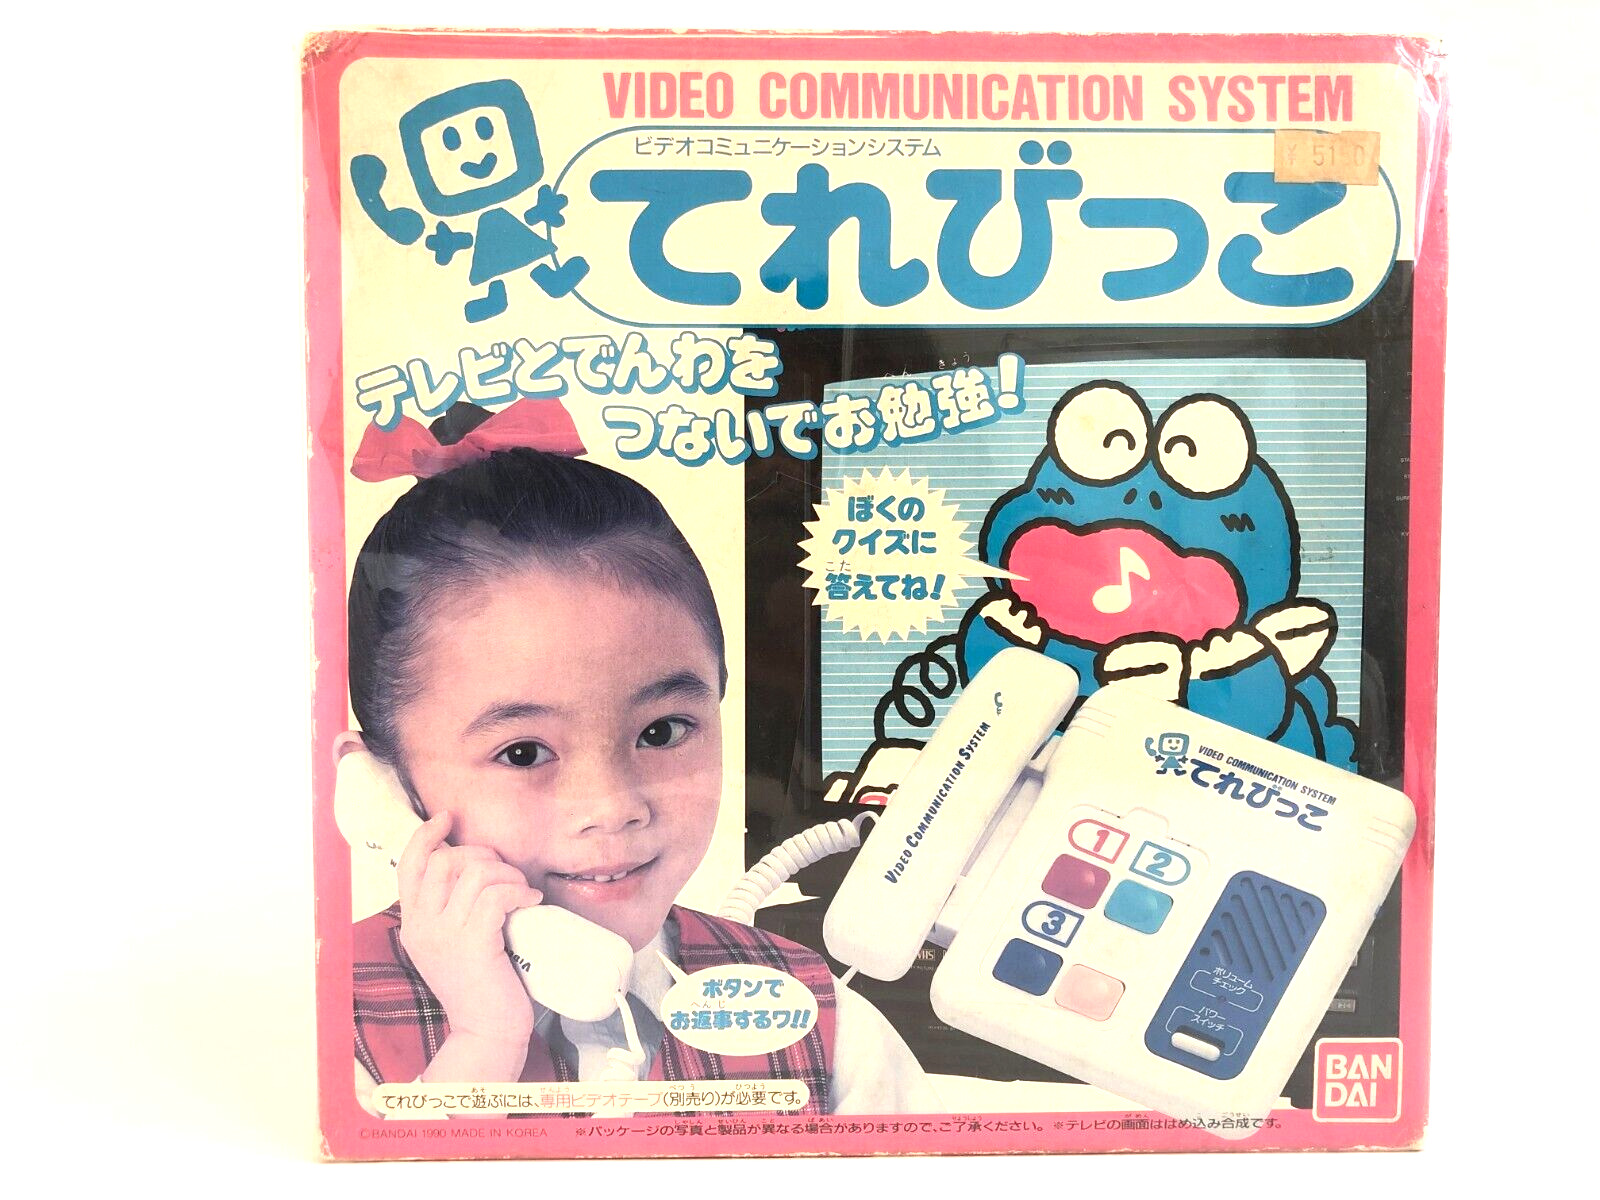 Terebikko Bandai Showa Retro Video Communication System Box 1990  From Japan